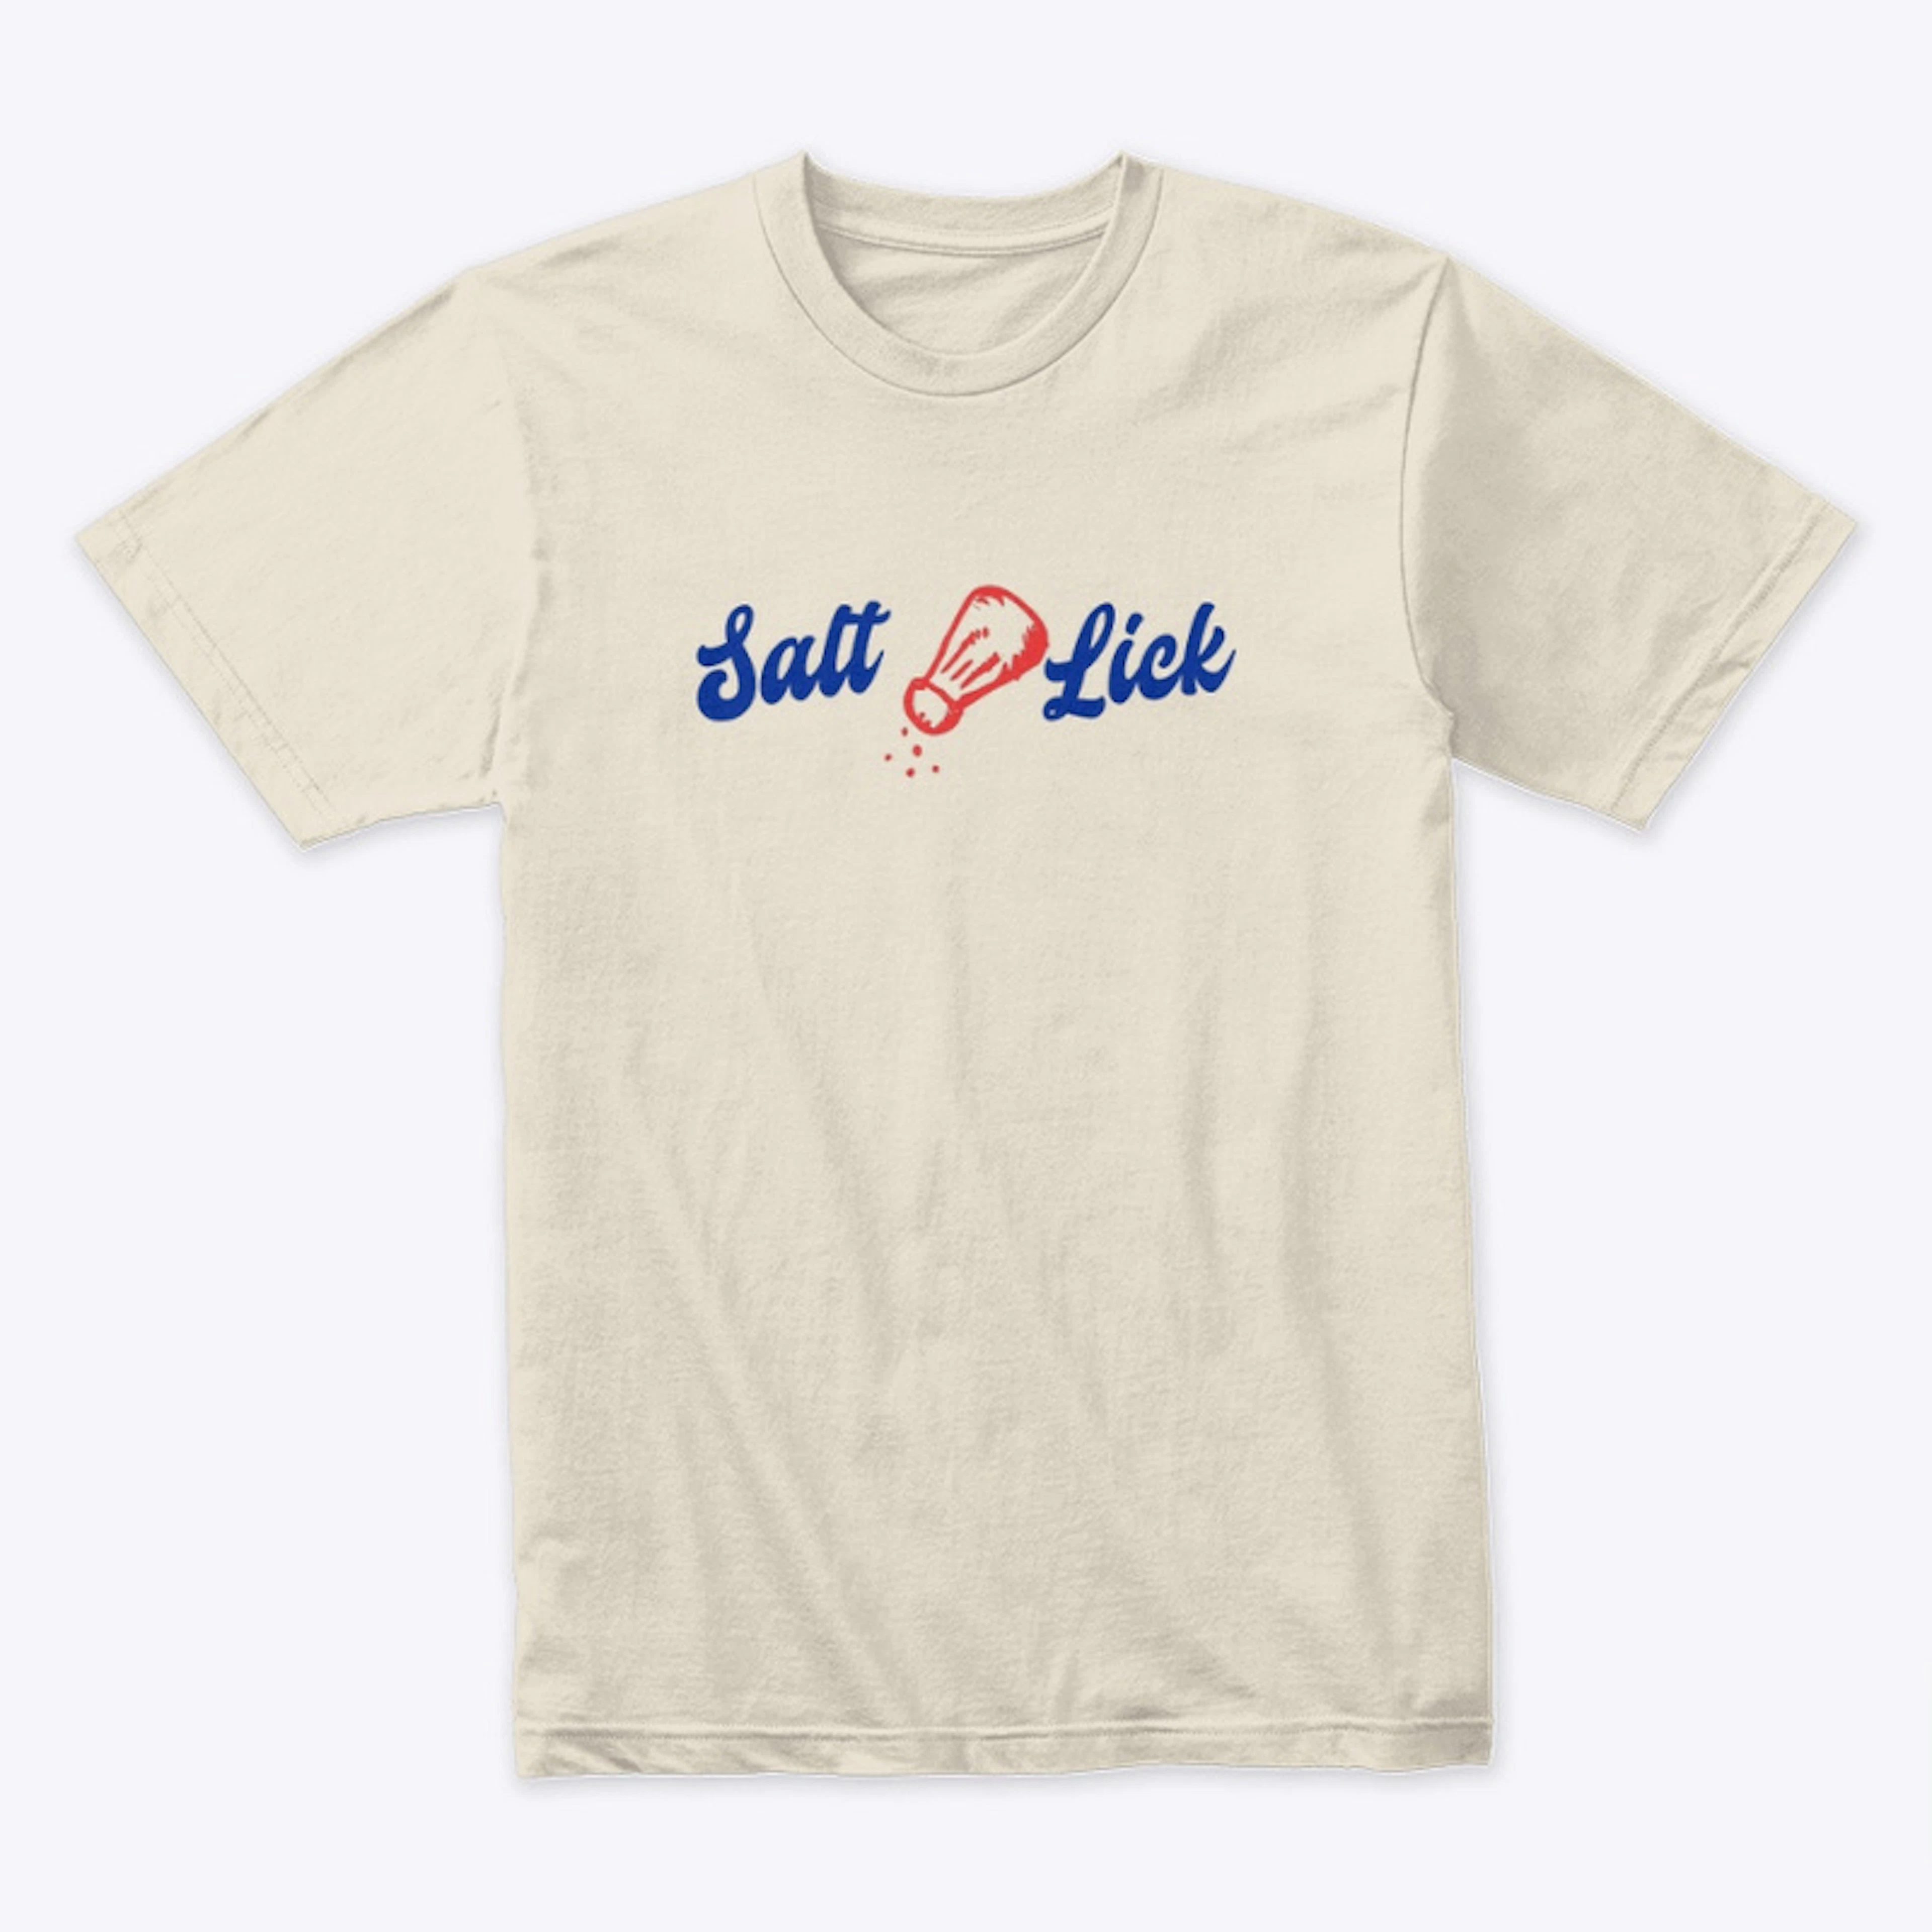 Salt lick apparel for adventures.